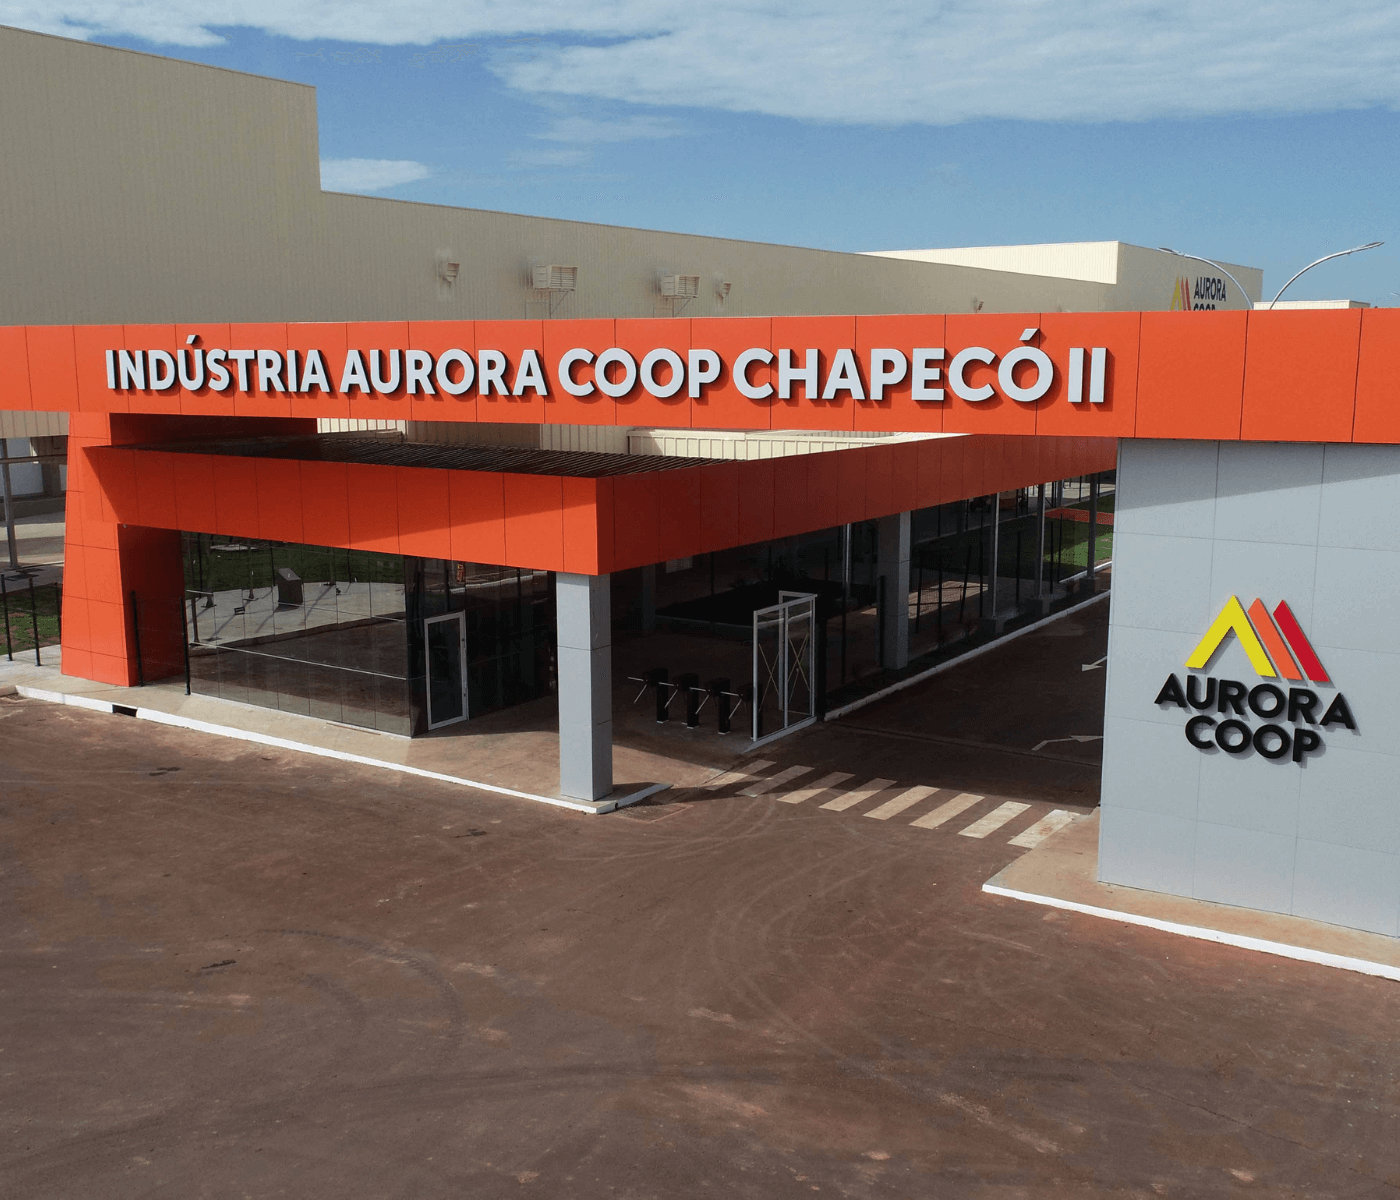 AURORA COOP inaugura moderna unidade industrial em Chapecó